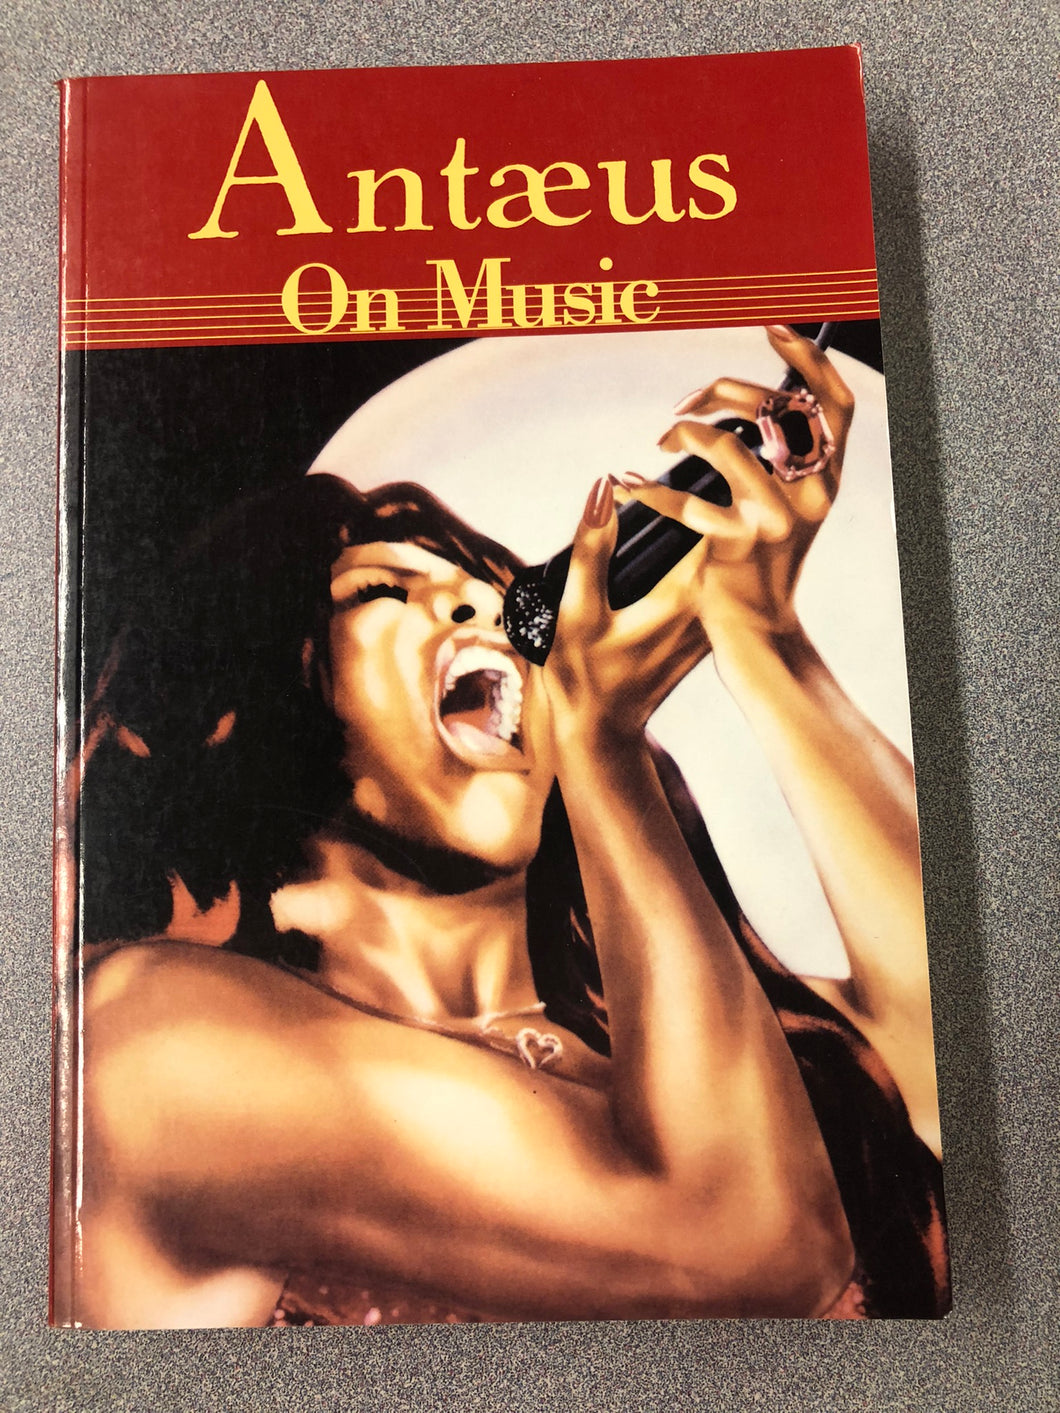 Antaeus on Music, Halpern, Daniel, ed., [1993] MU 8/22